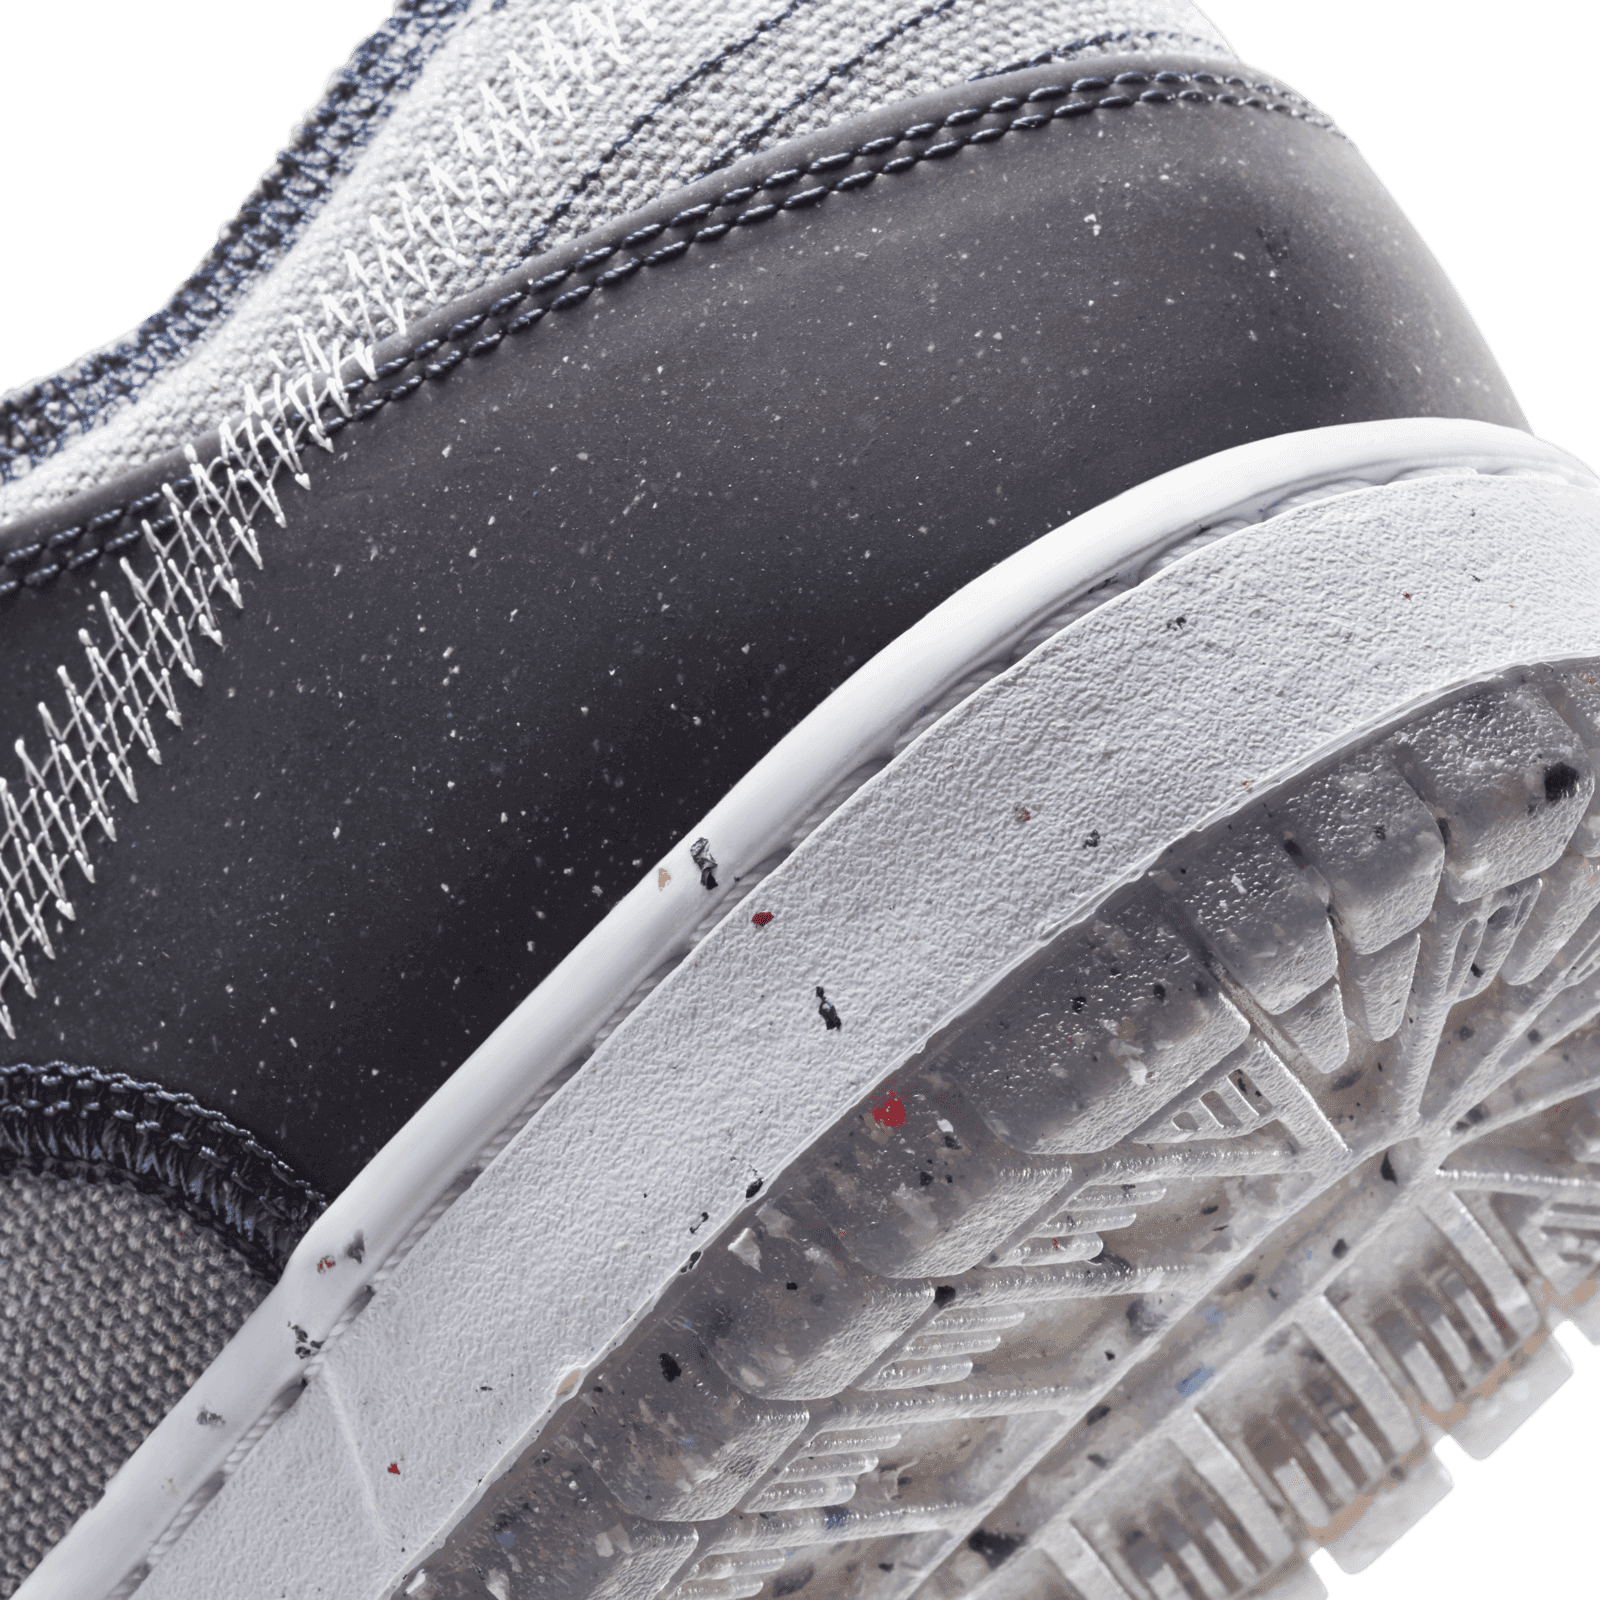 Nike SB Dunk Low Pro E Dark Grey - CT2224-001 Raffles and Release Date